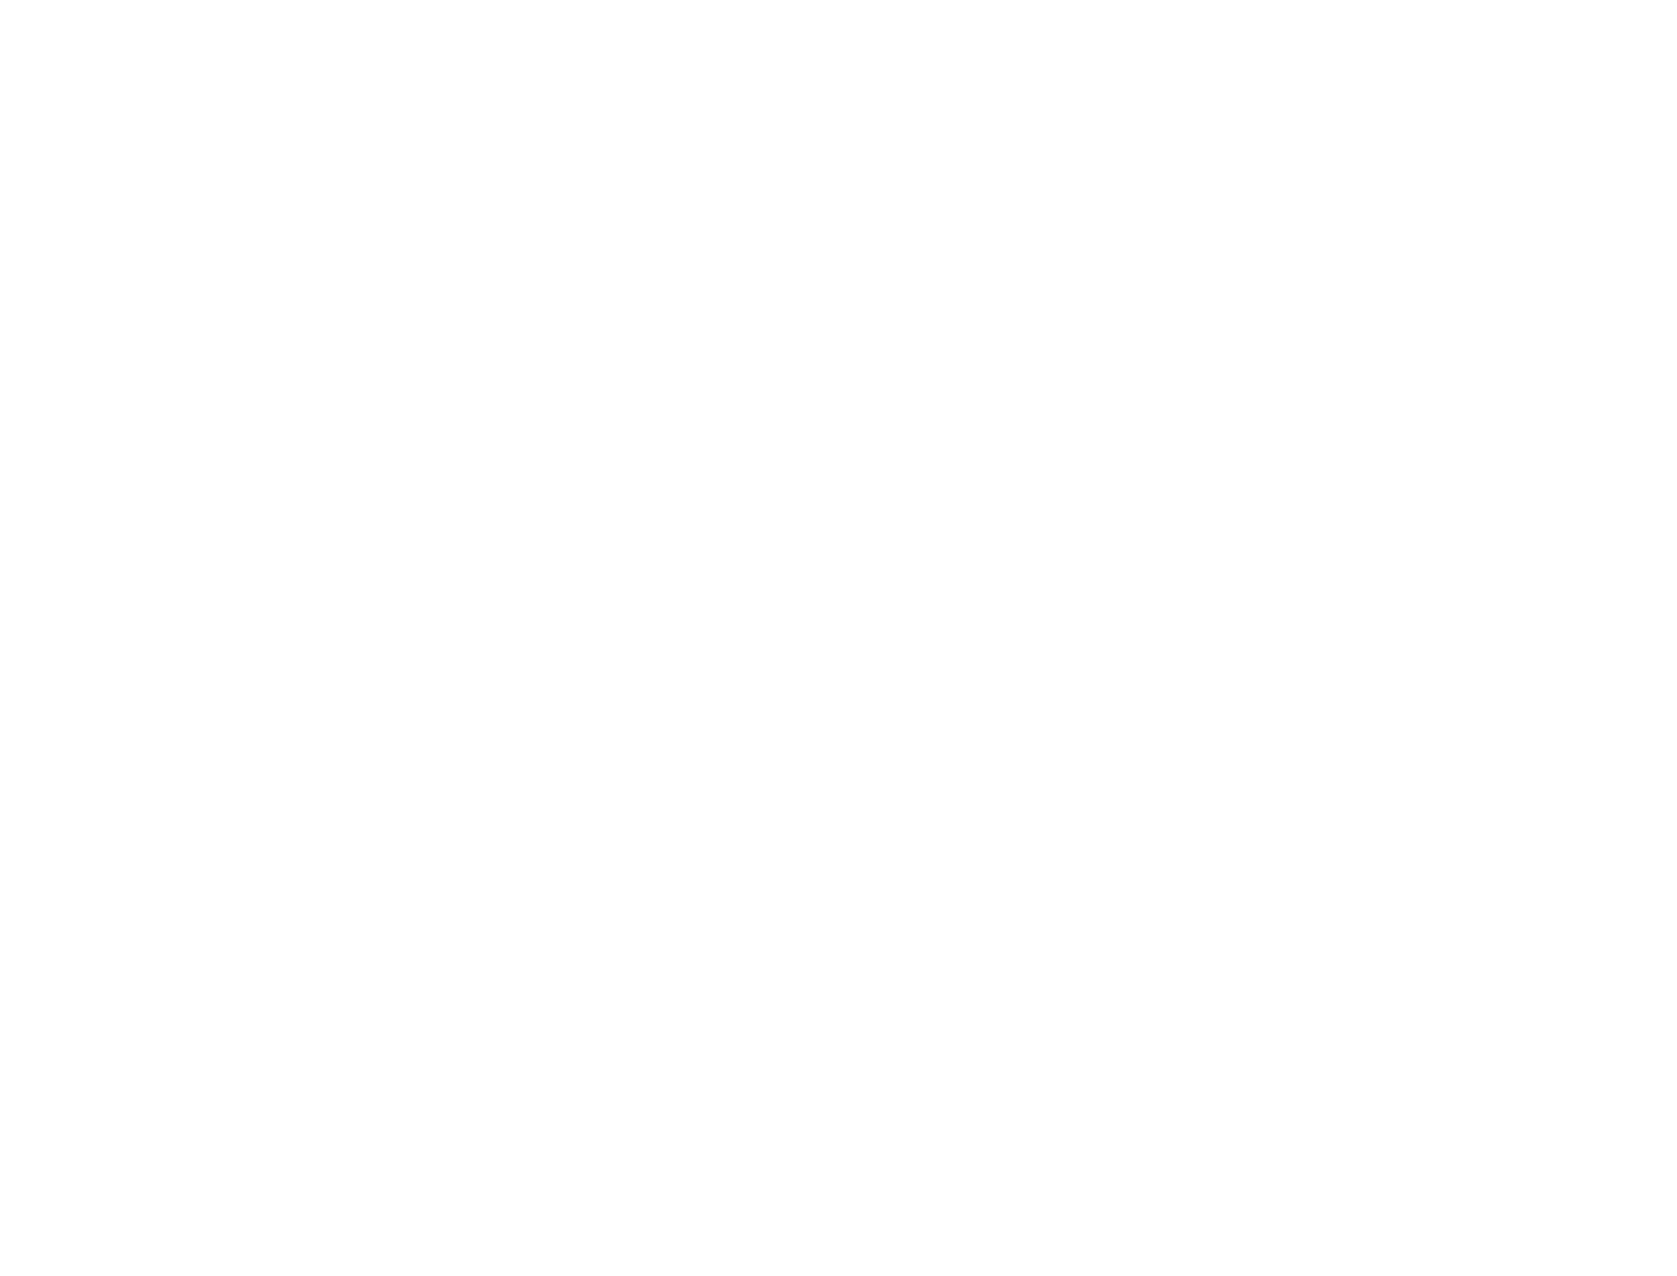 Drupal logo white stacked